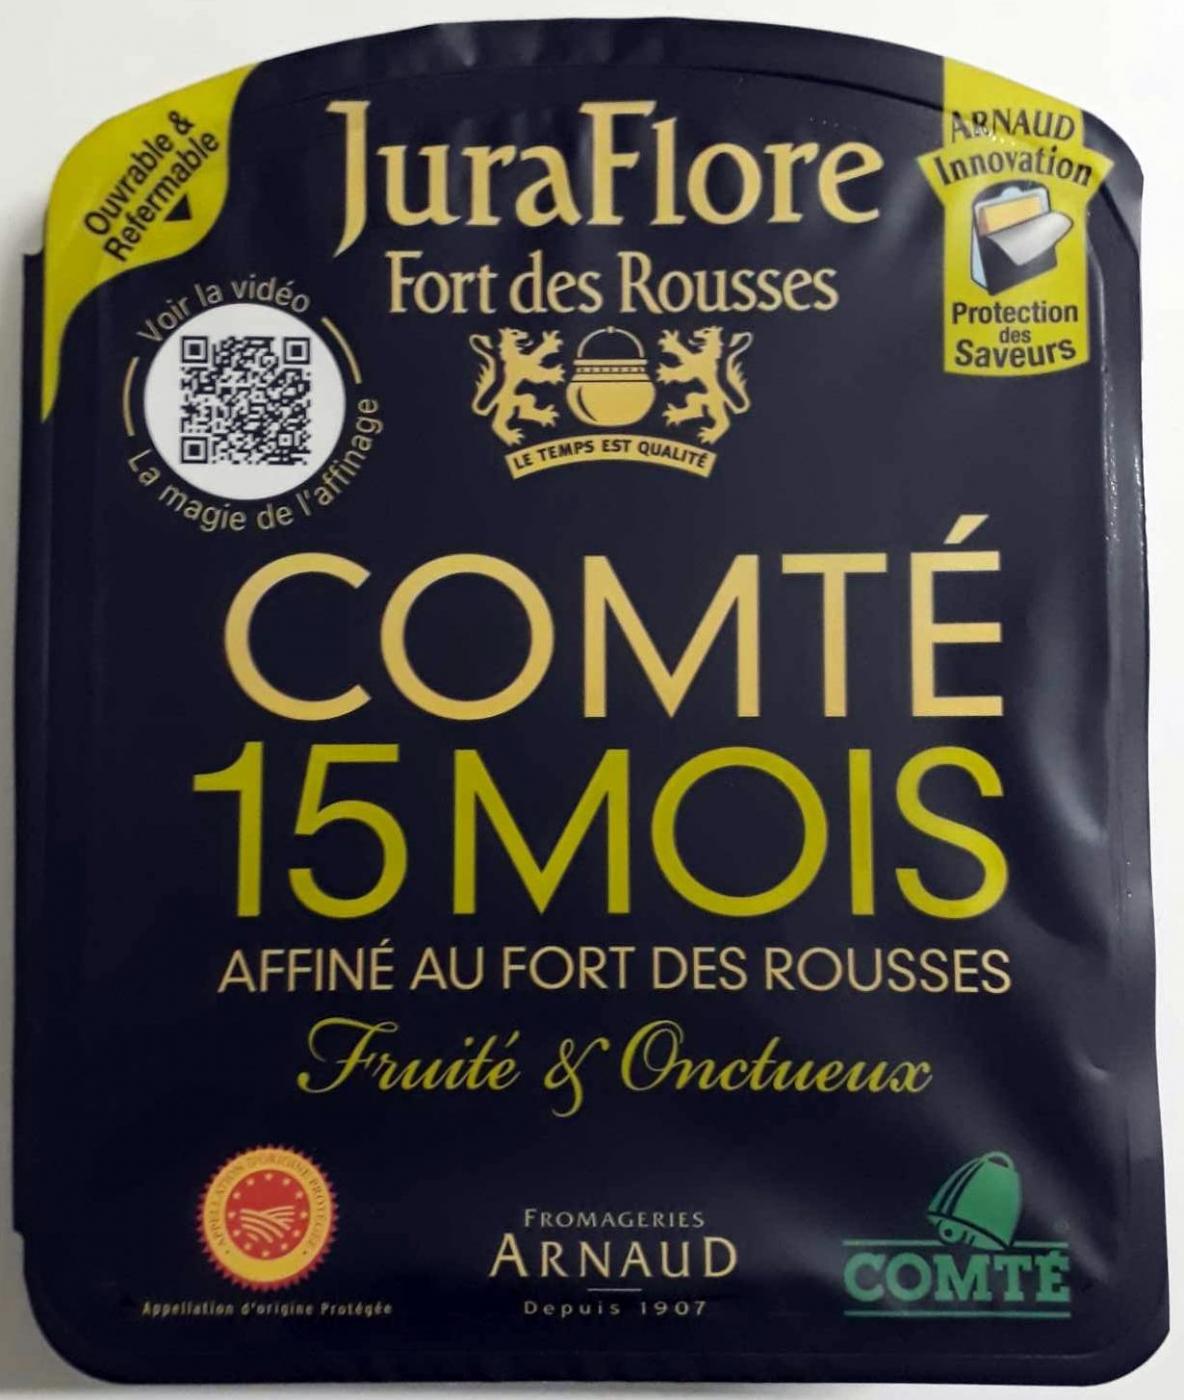 Juraflore Comte portion 15mois 200g